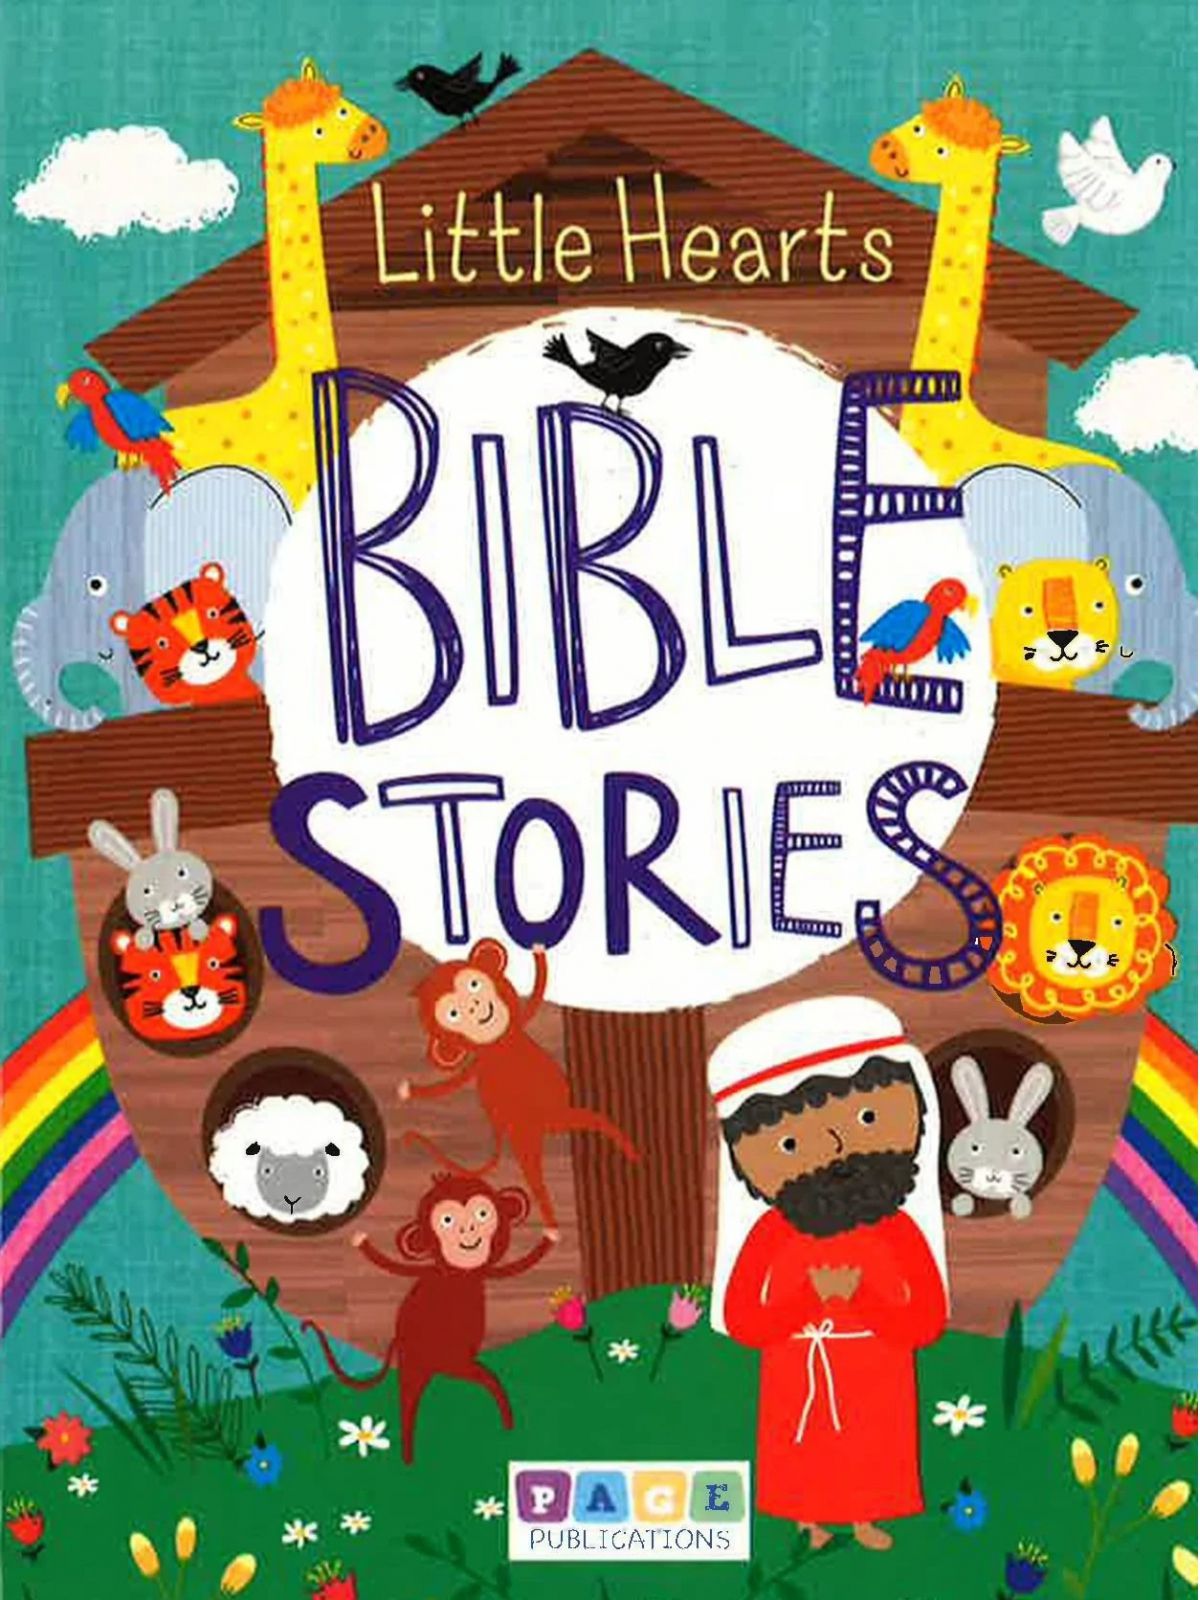 LITTLE HEARTS BIBLE STORIES